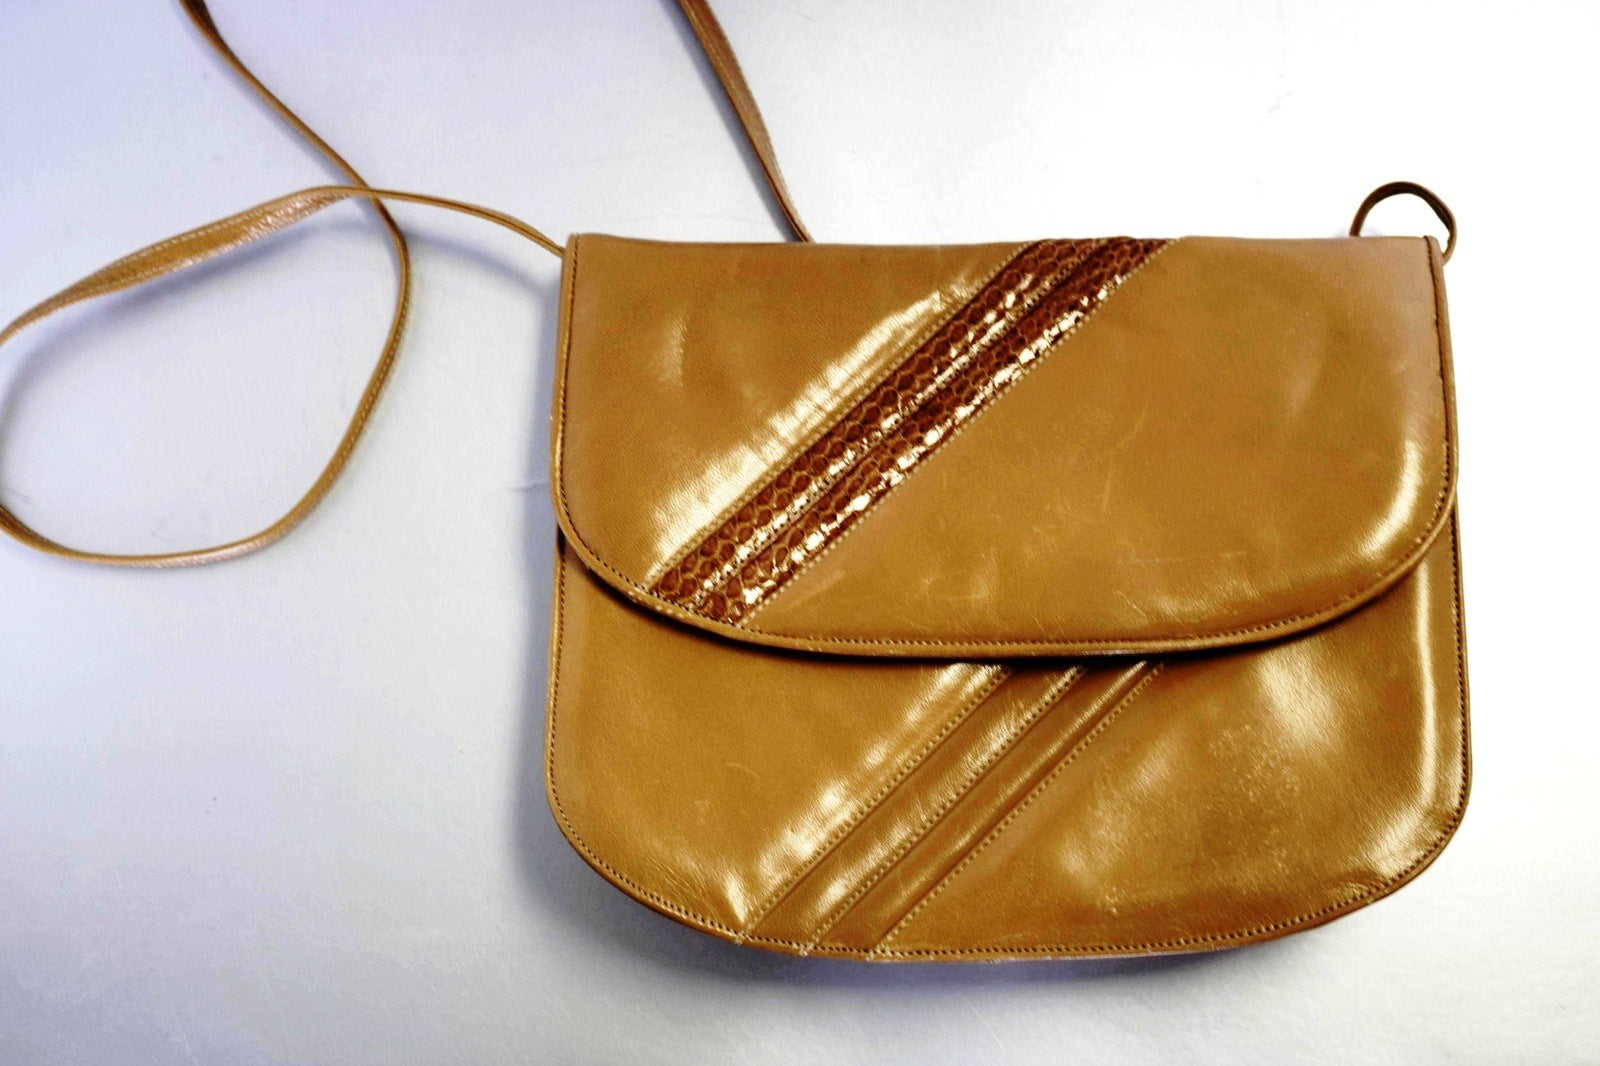 Arciere Italian Vintage Bag: An Emblem of Italian Craftsmanship